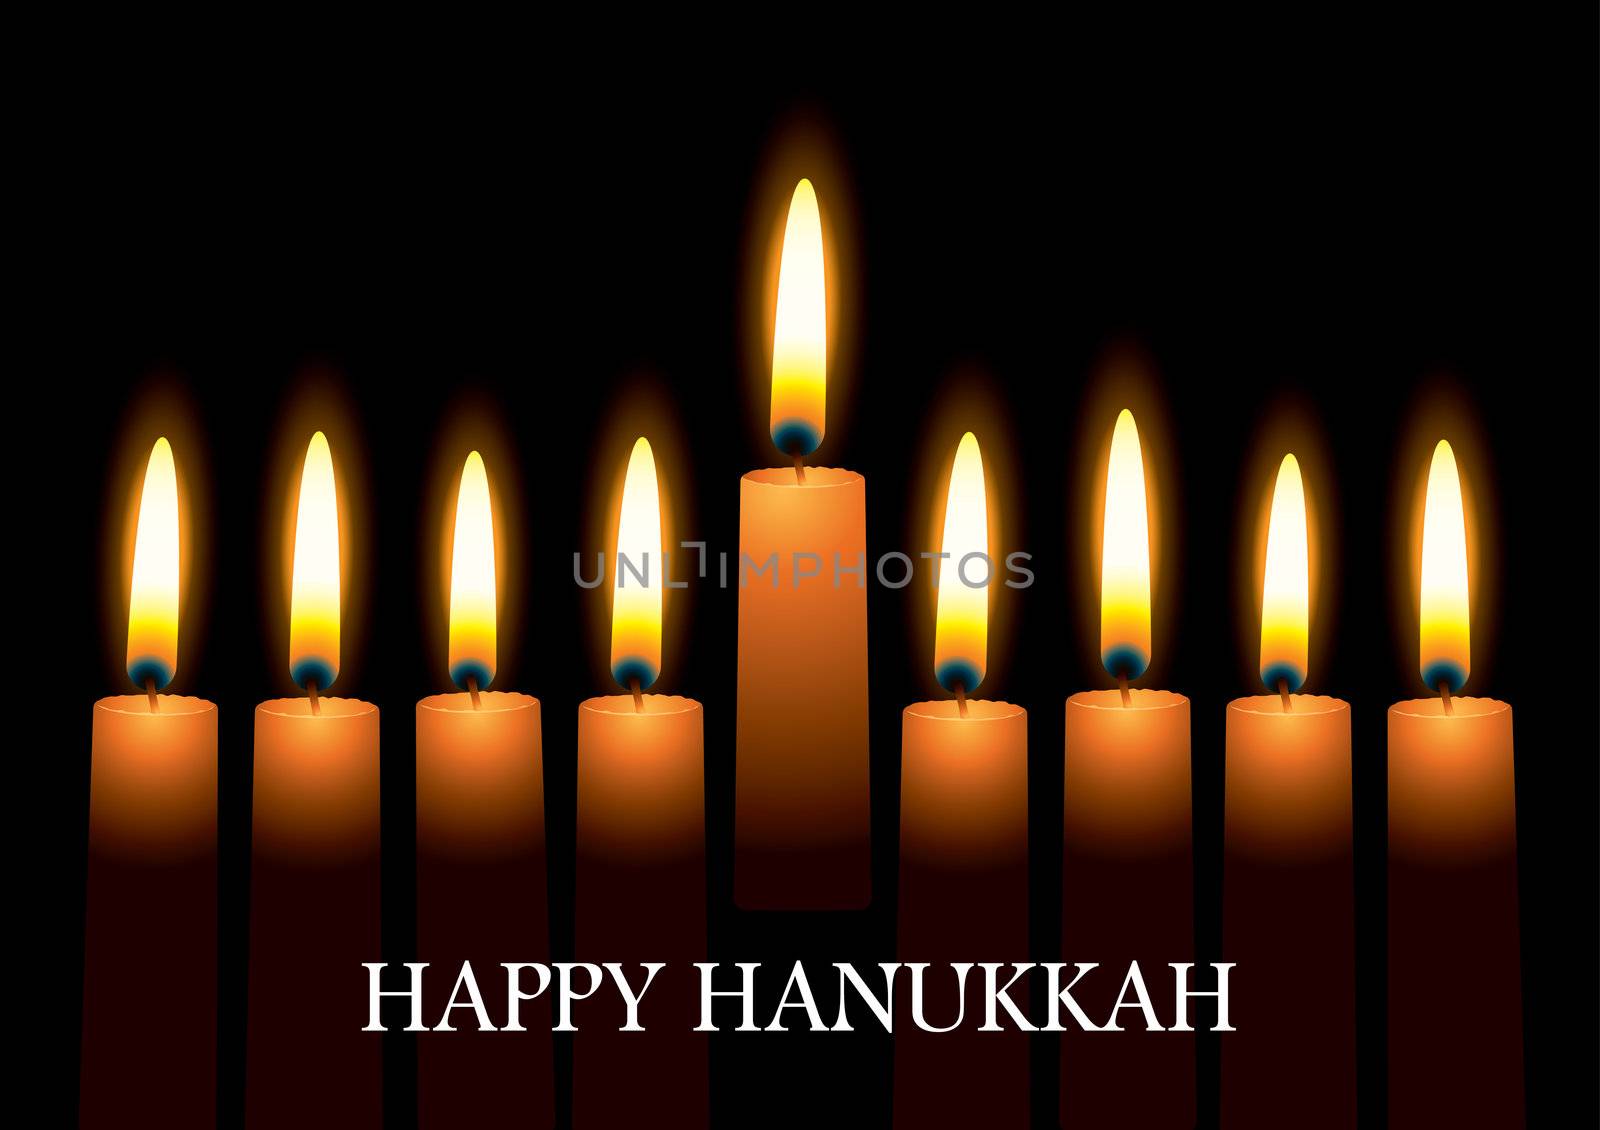 Hanukkah candles by nicemonkey